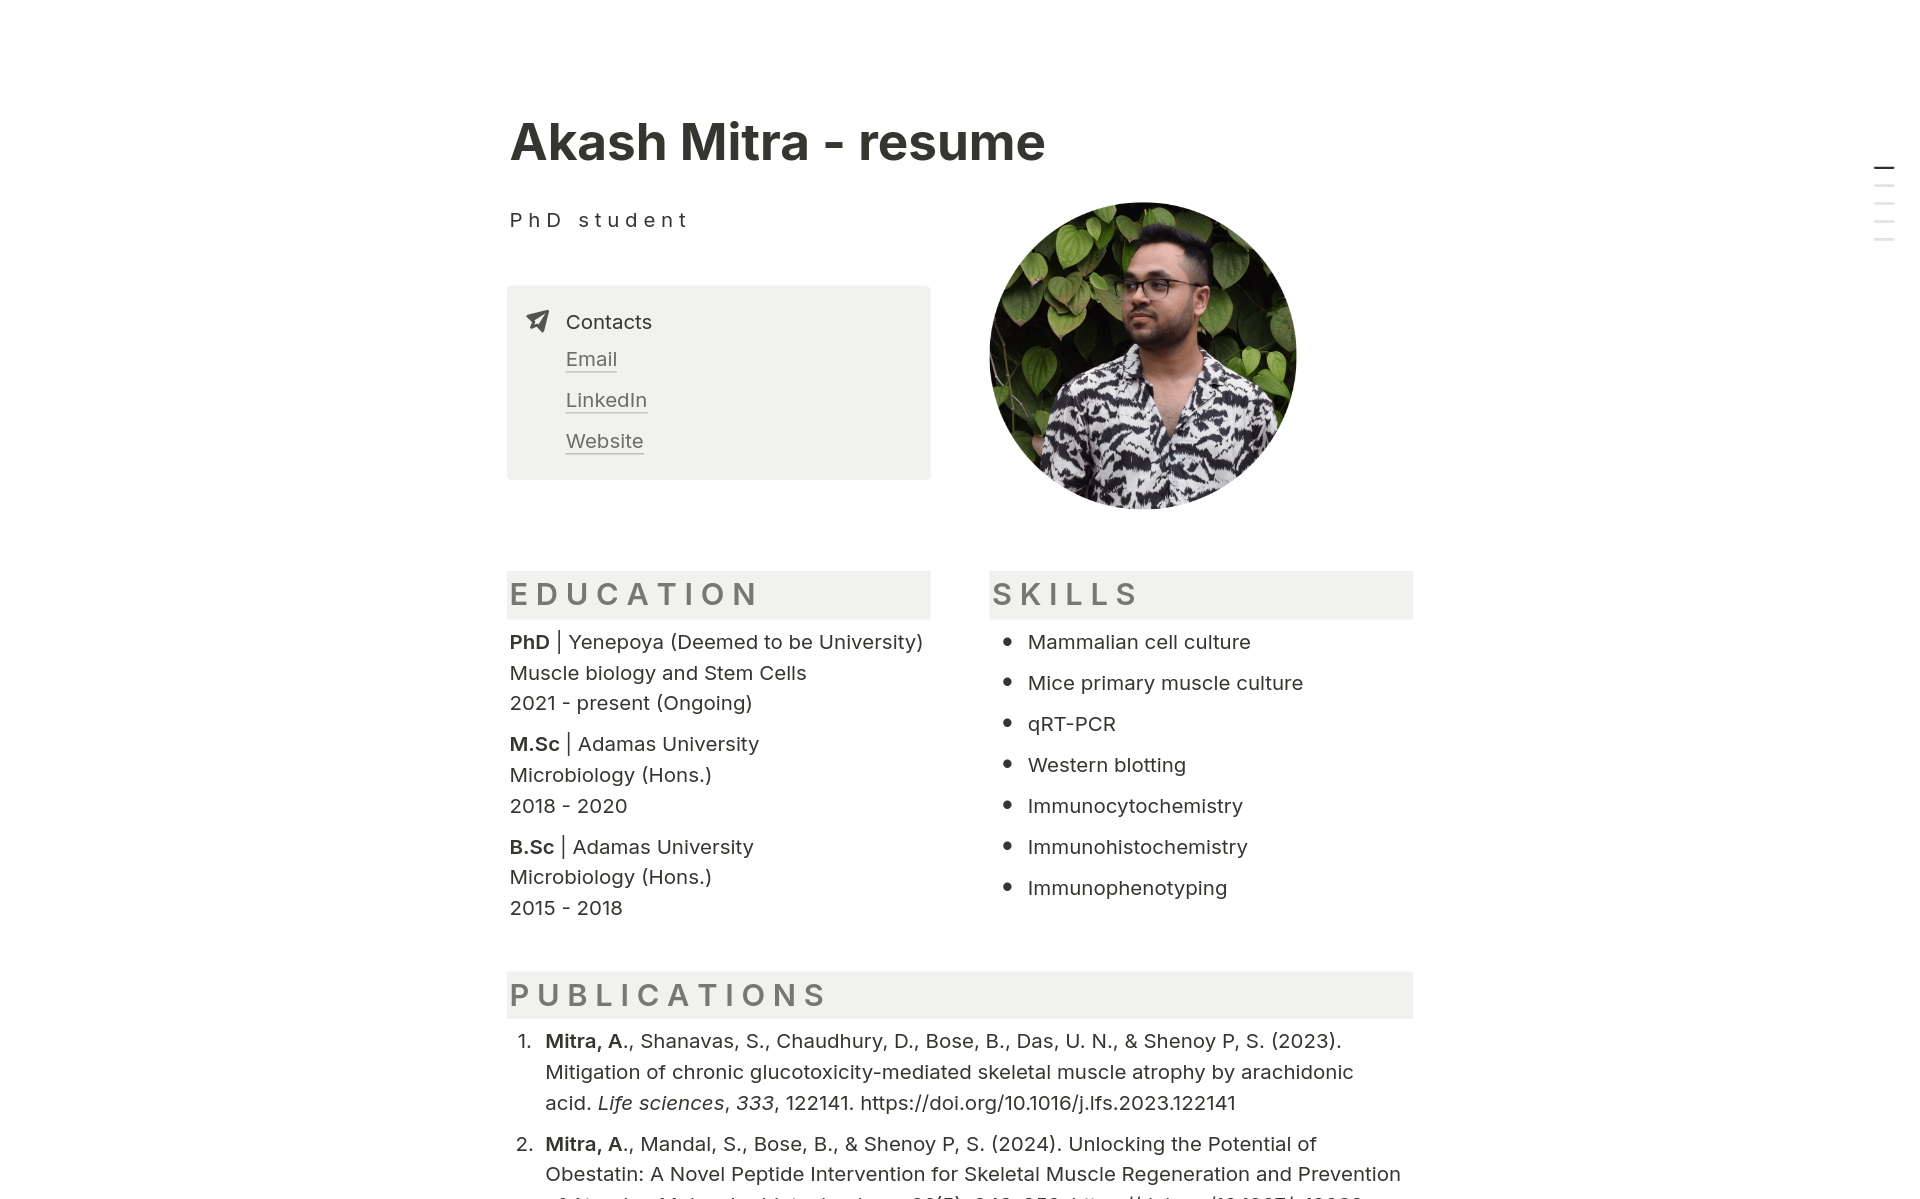 A simple minimalistic CV template